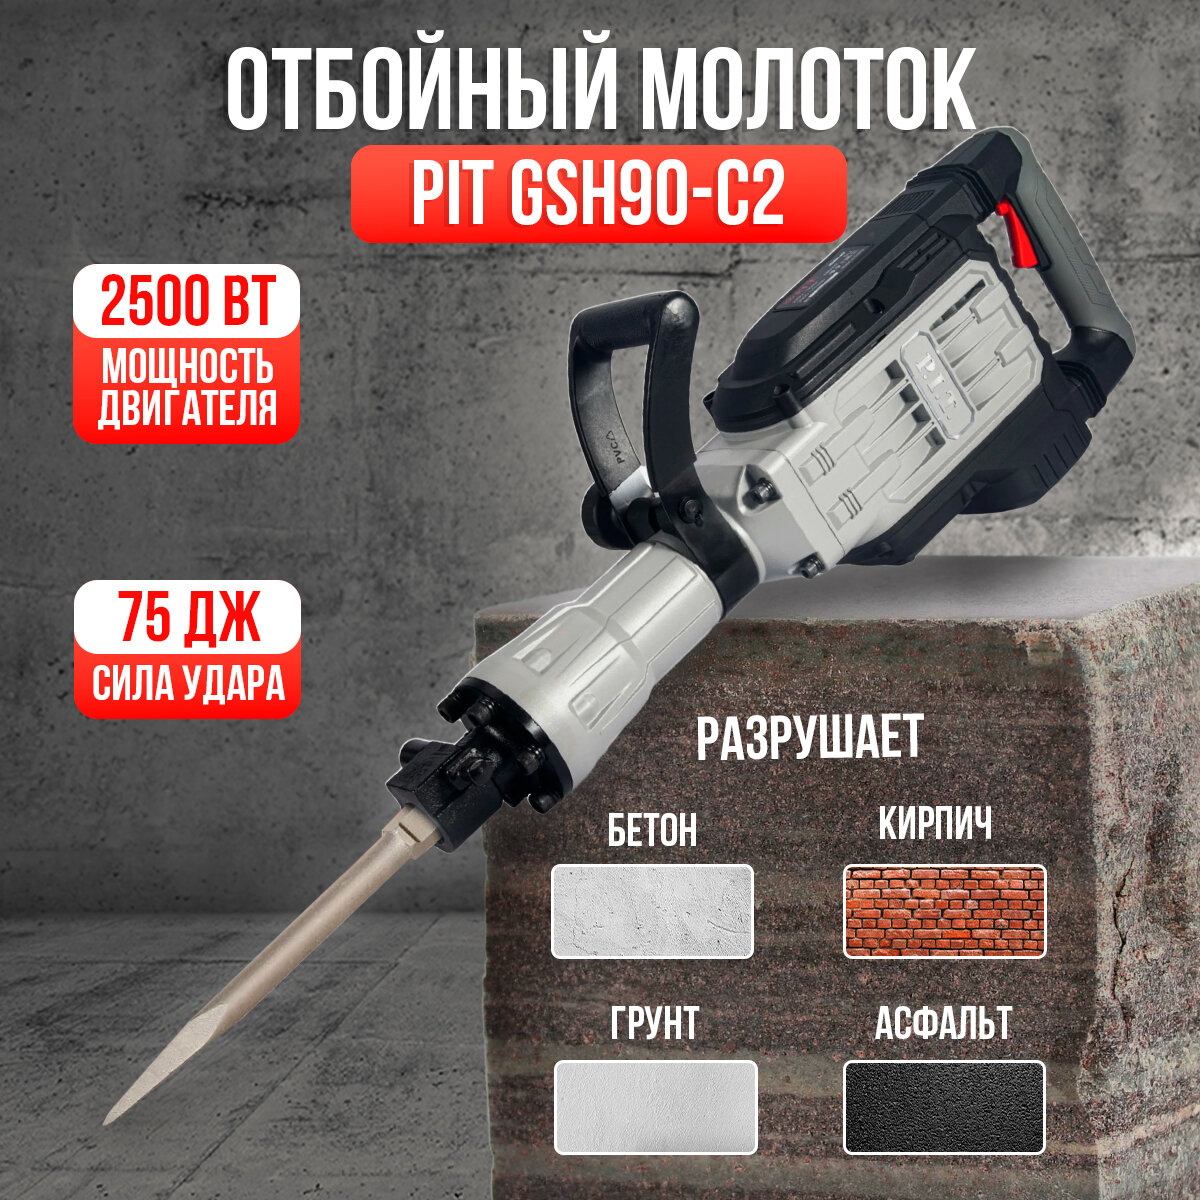 Отбойный молоток PIT GSH90-C2